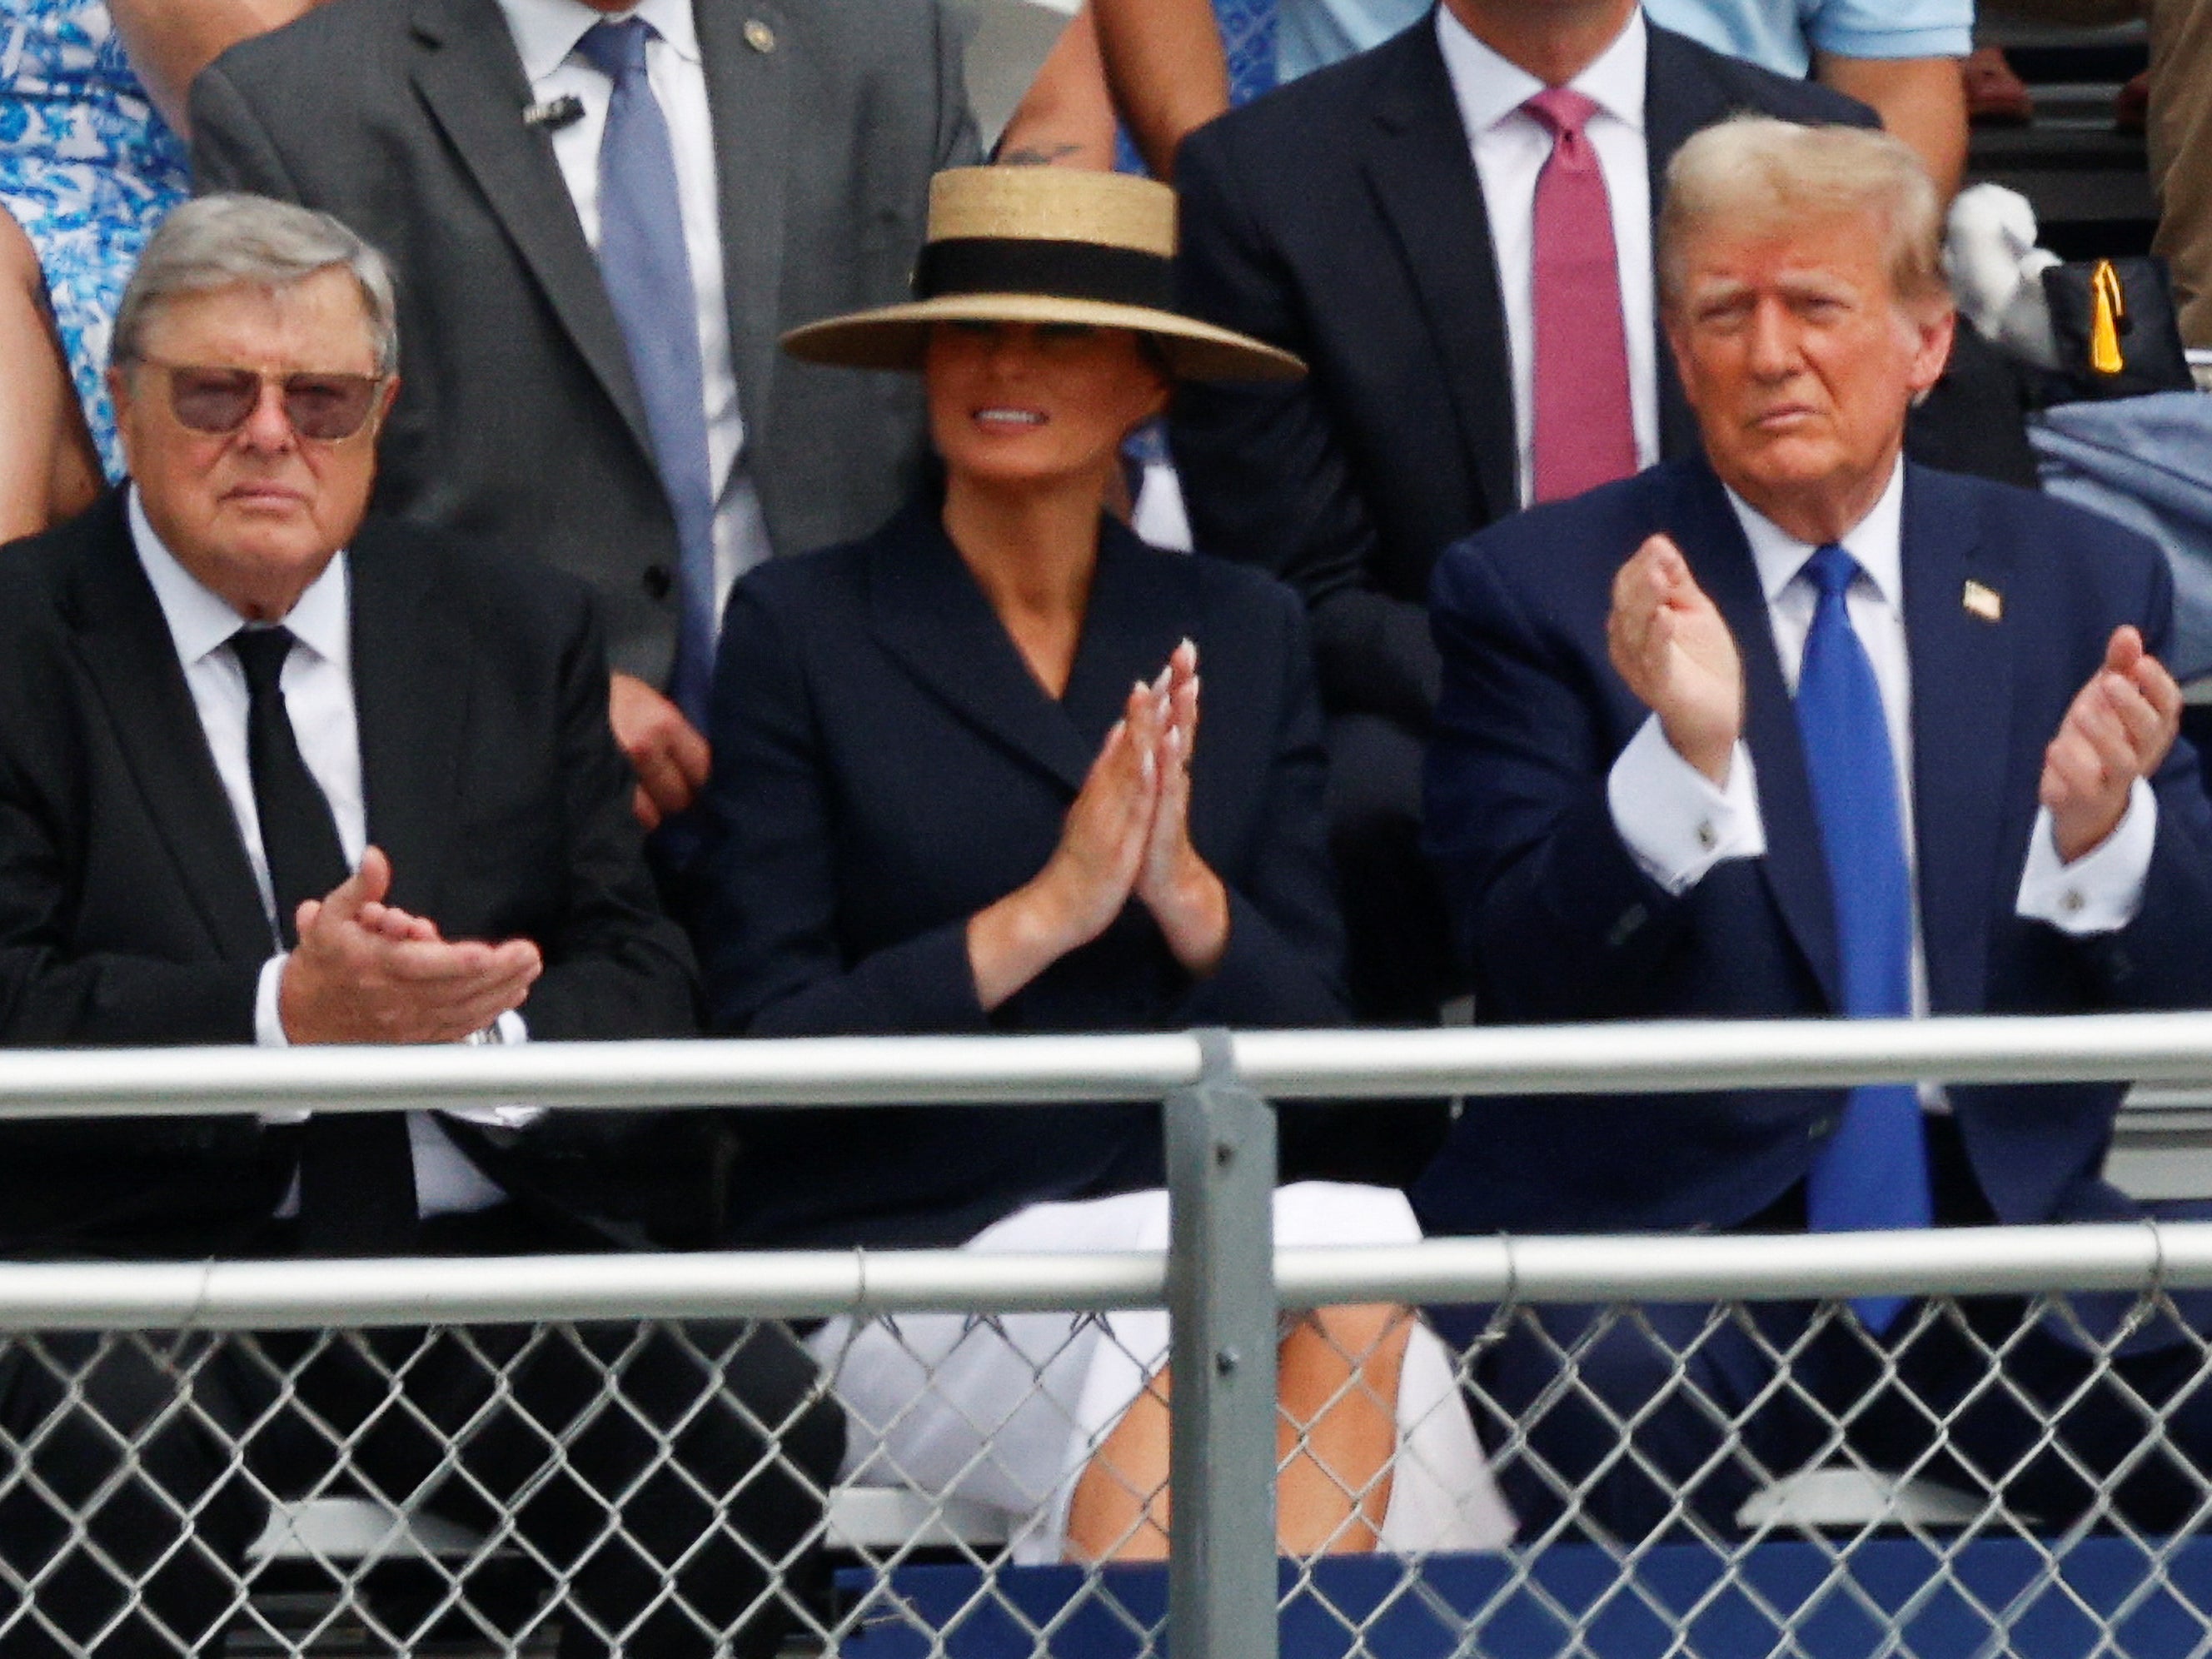 Viktor Knavs, Melania Trump and Donald Trump attend Barron Trump’s high school graduation at Oxbridge Academy in West Palm Beach, Florida, on May 17.